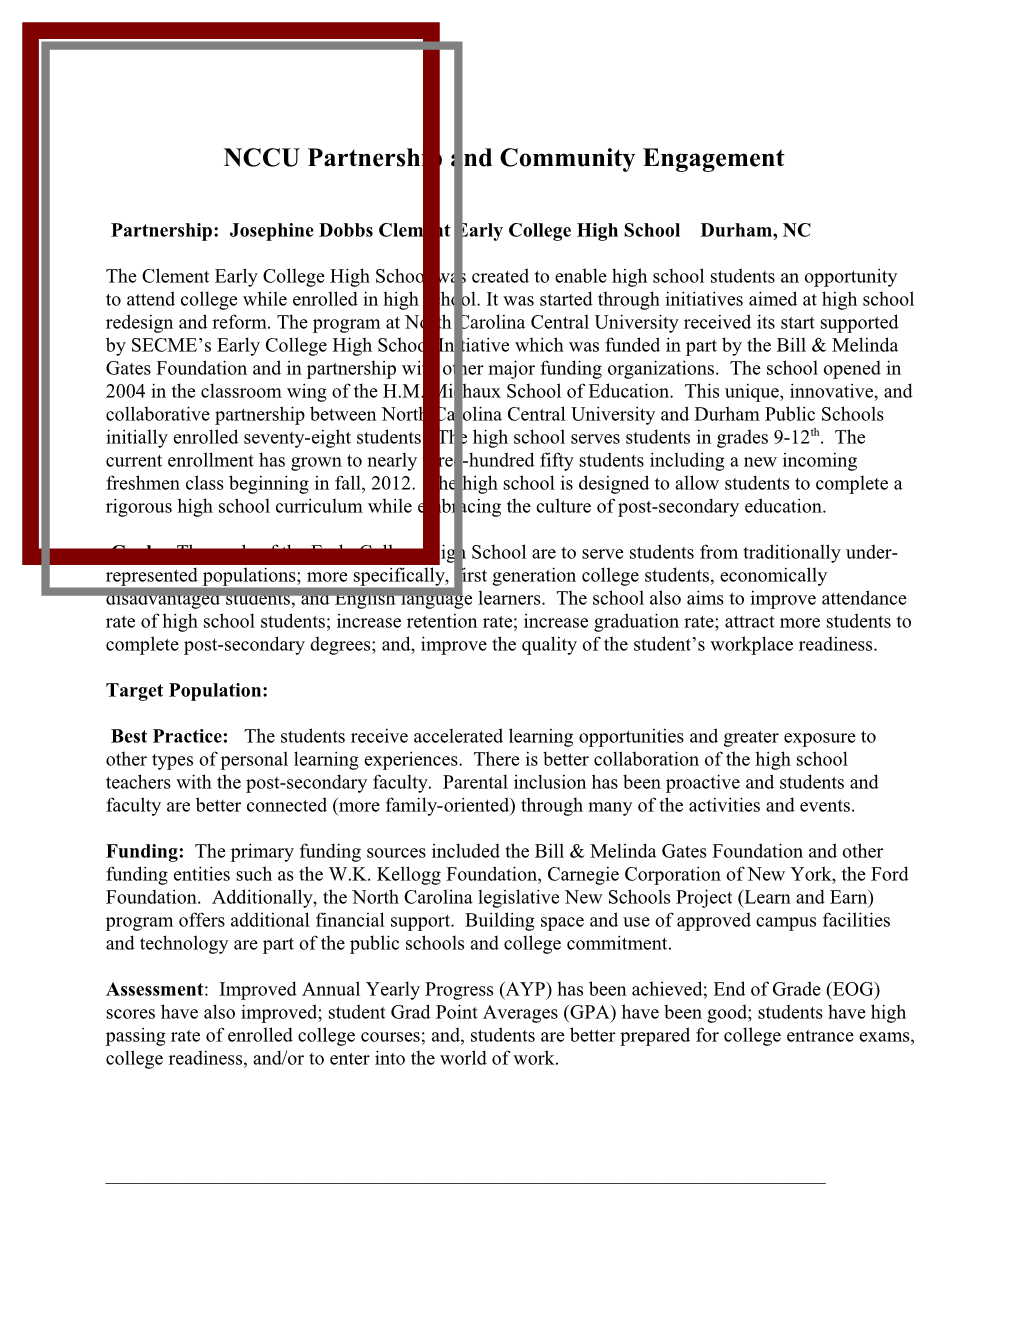 NCCU Partnership and Community Engagement (MS Word)